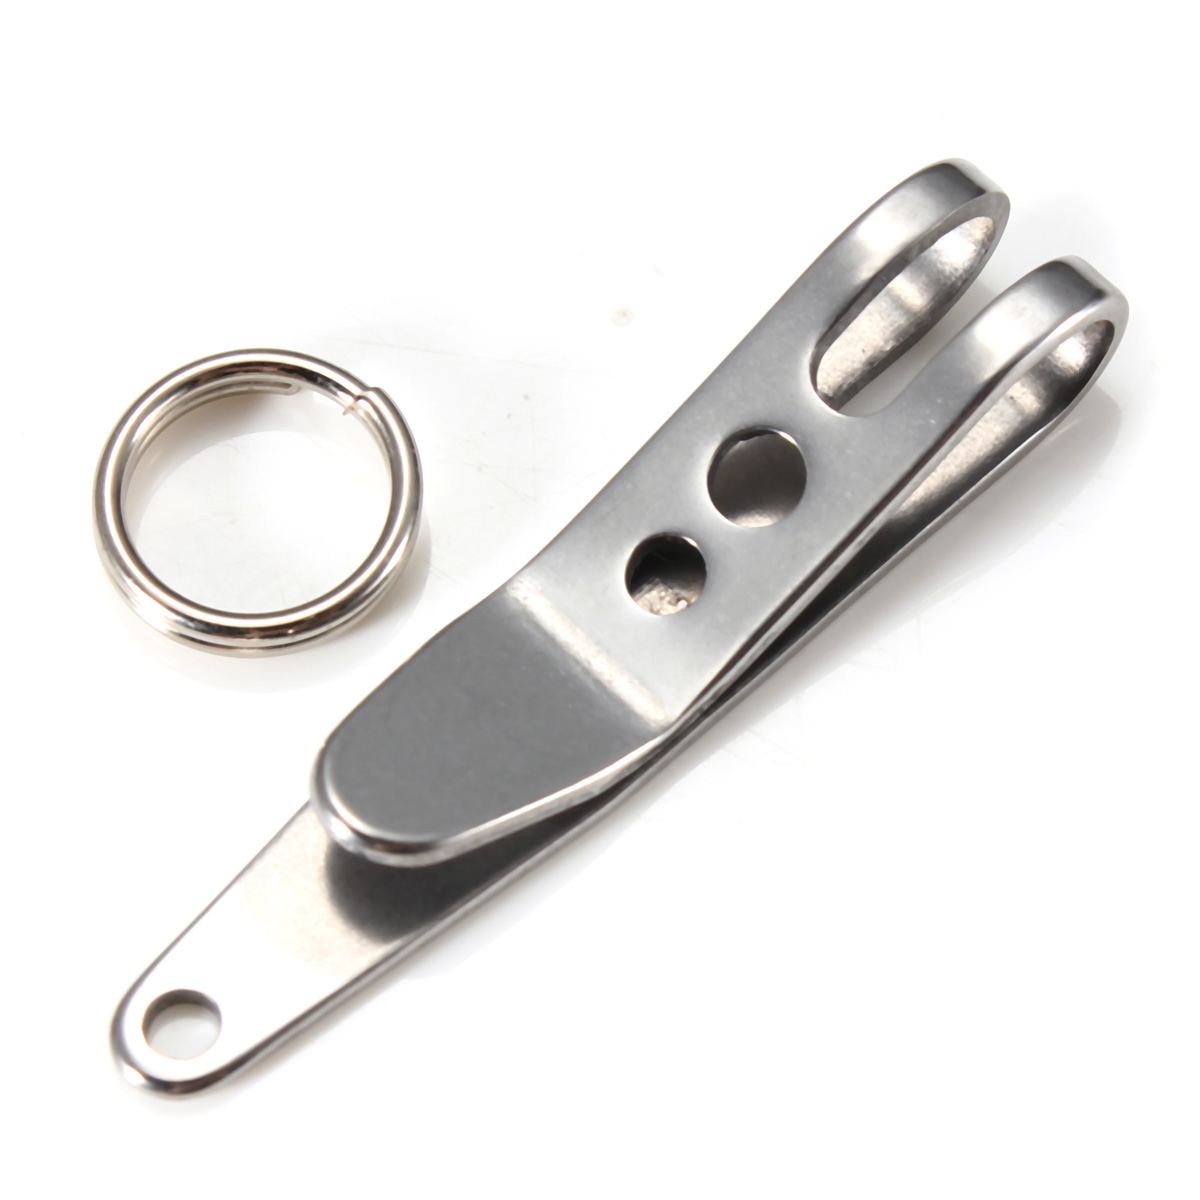 Xtools-EDC-Mini-Clip-Flashlight-Clip-Money-Cash-Holder-Key-Chain-Clip-With-Ring-988356-1